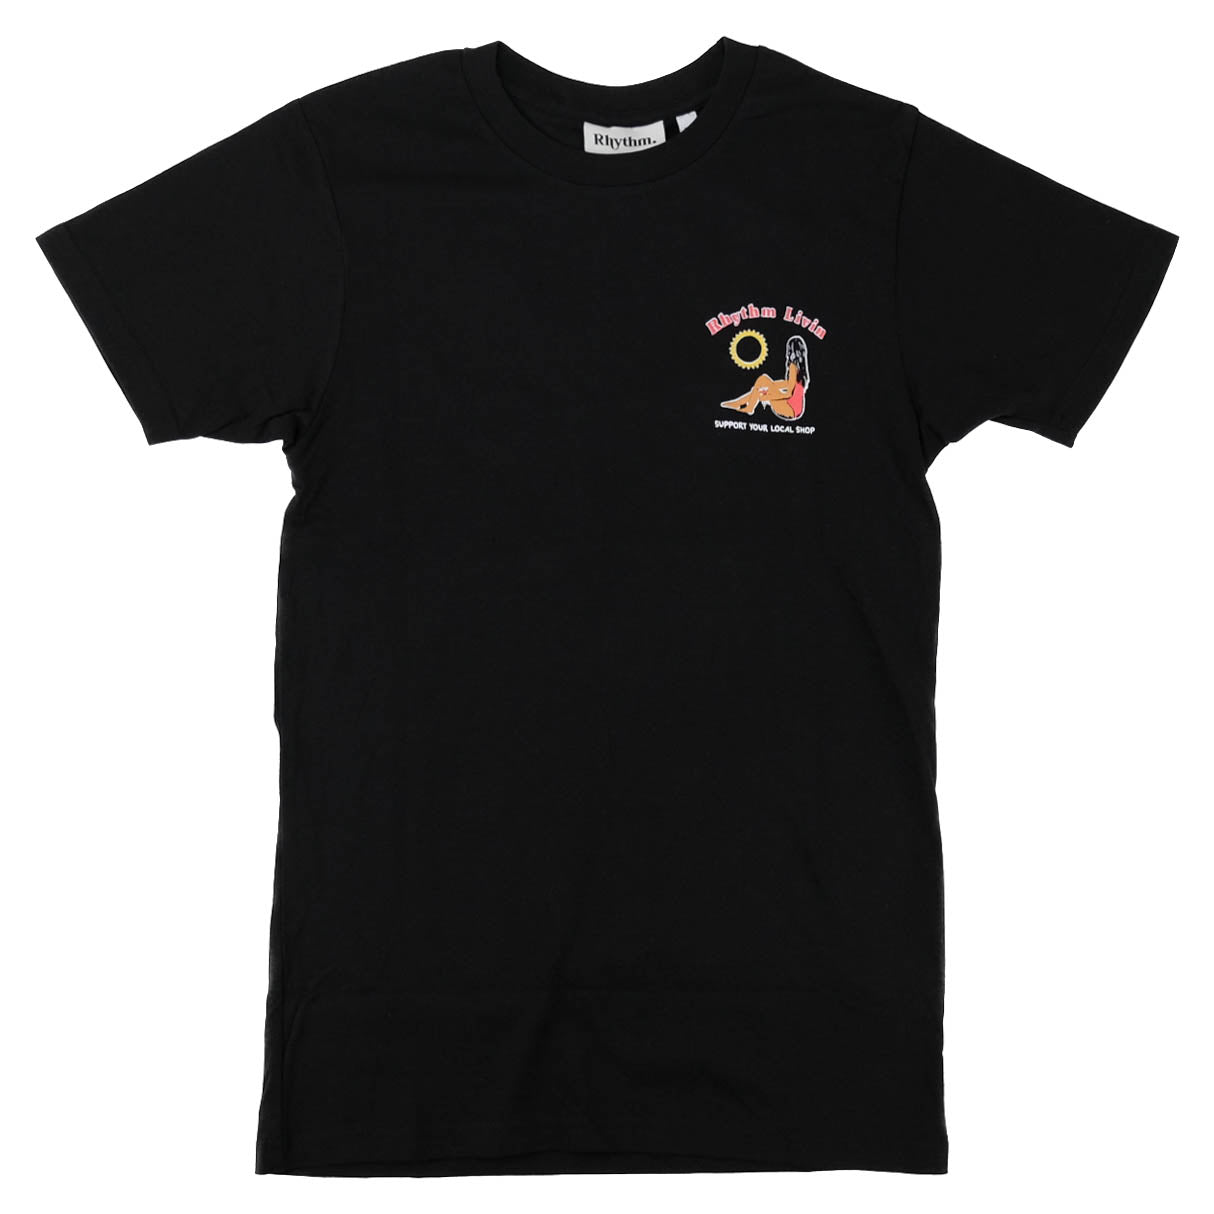 Island Shop S/S Tee Shirt - Black